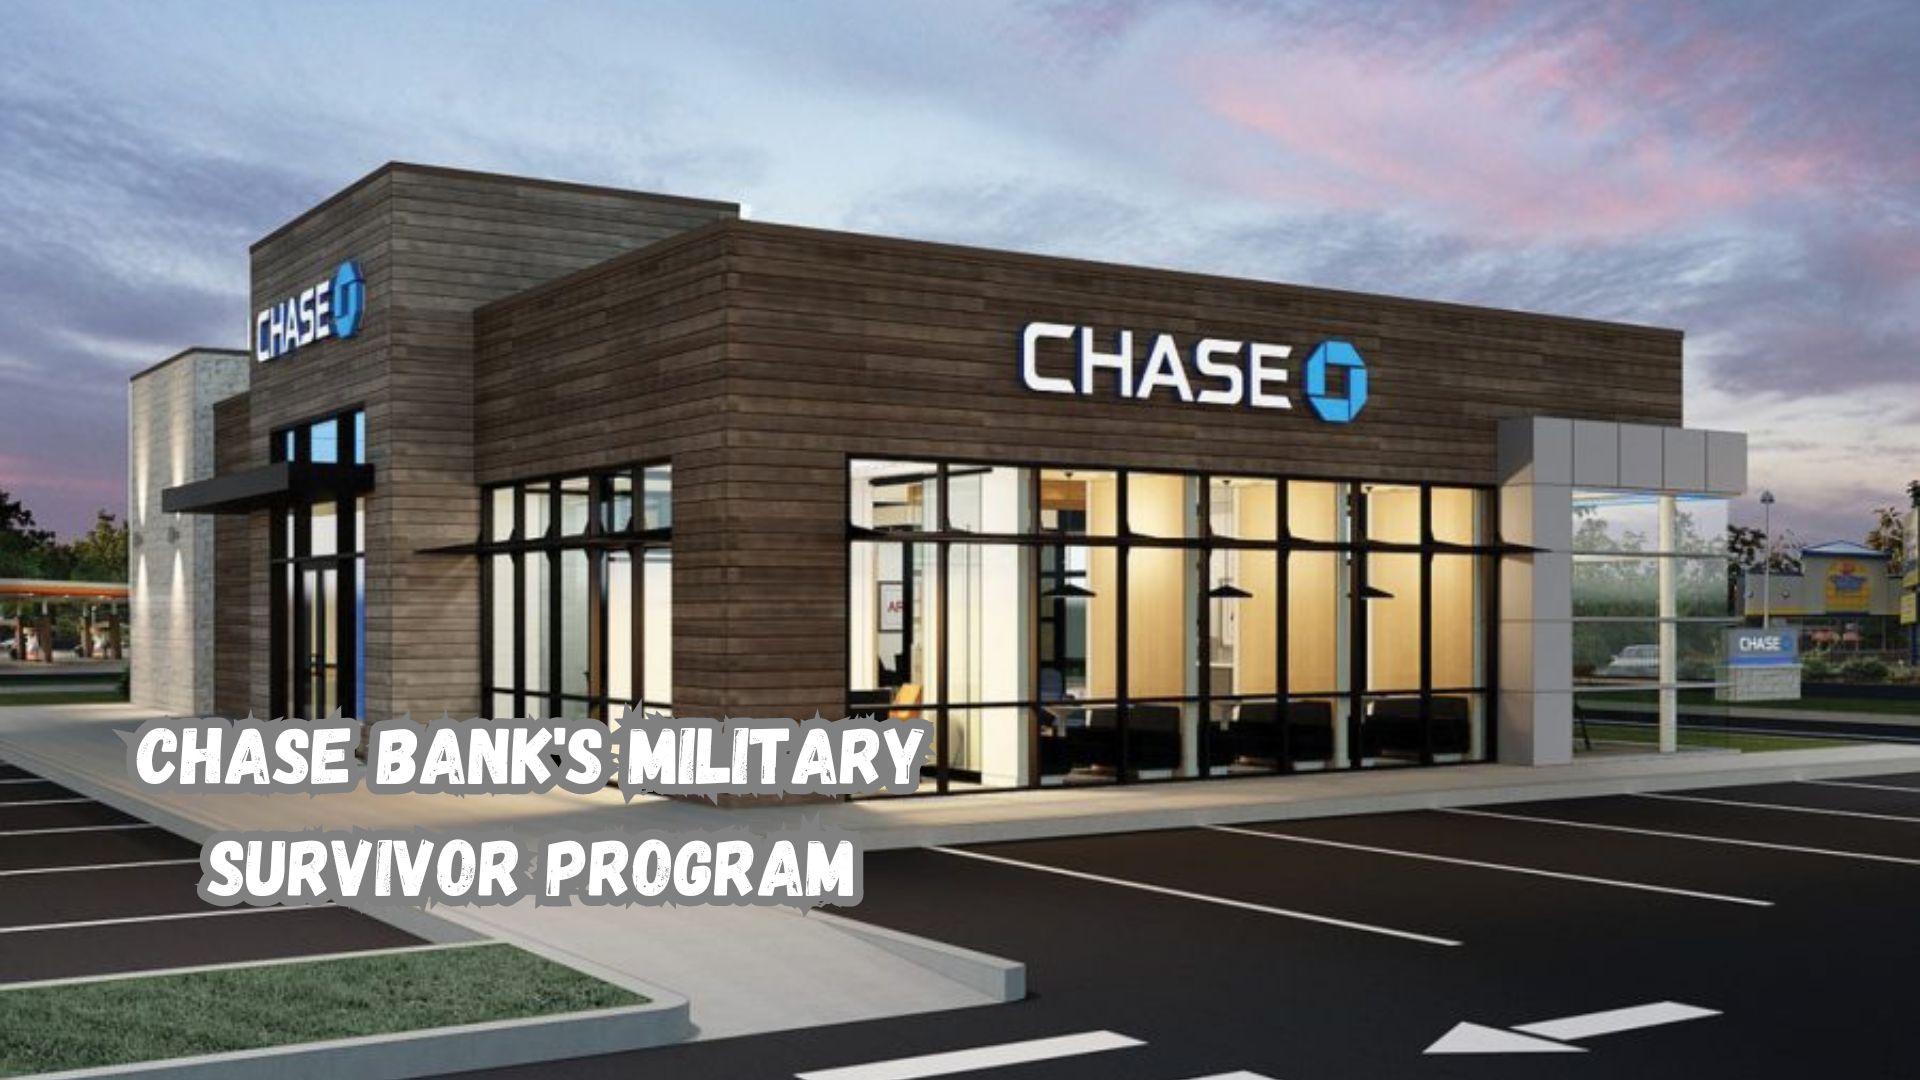 Chase Bank's Military Survivor Program.